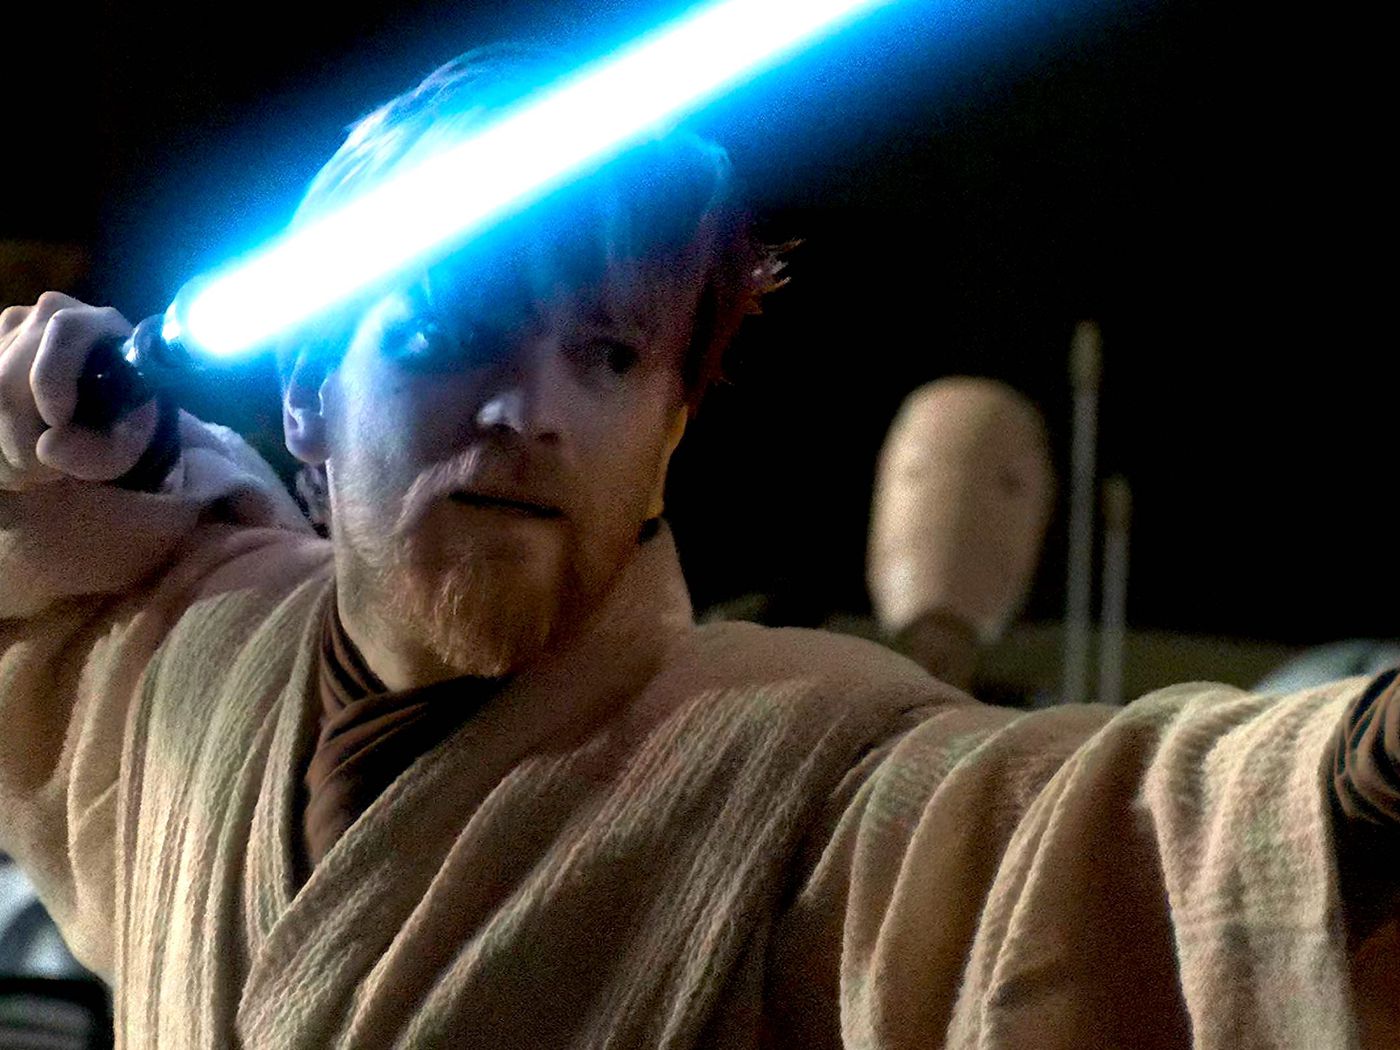 Obi Wan Kenobi TV Show Cast Is Stacked With Prequel Stars & New Actors